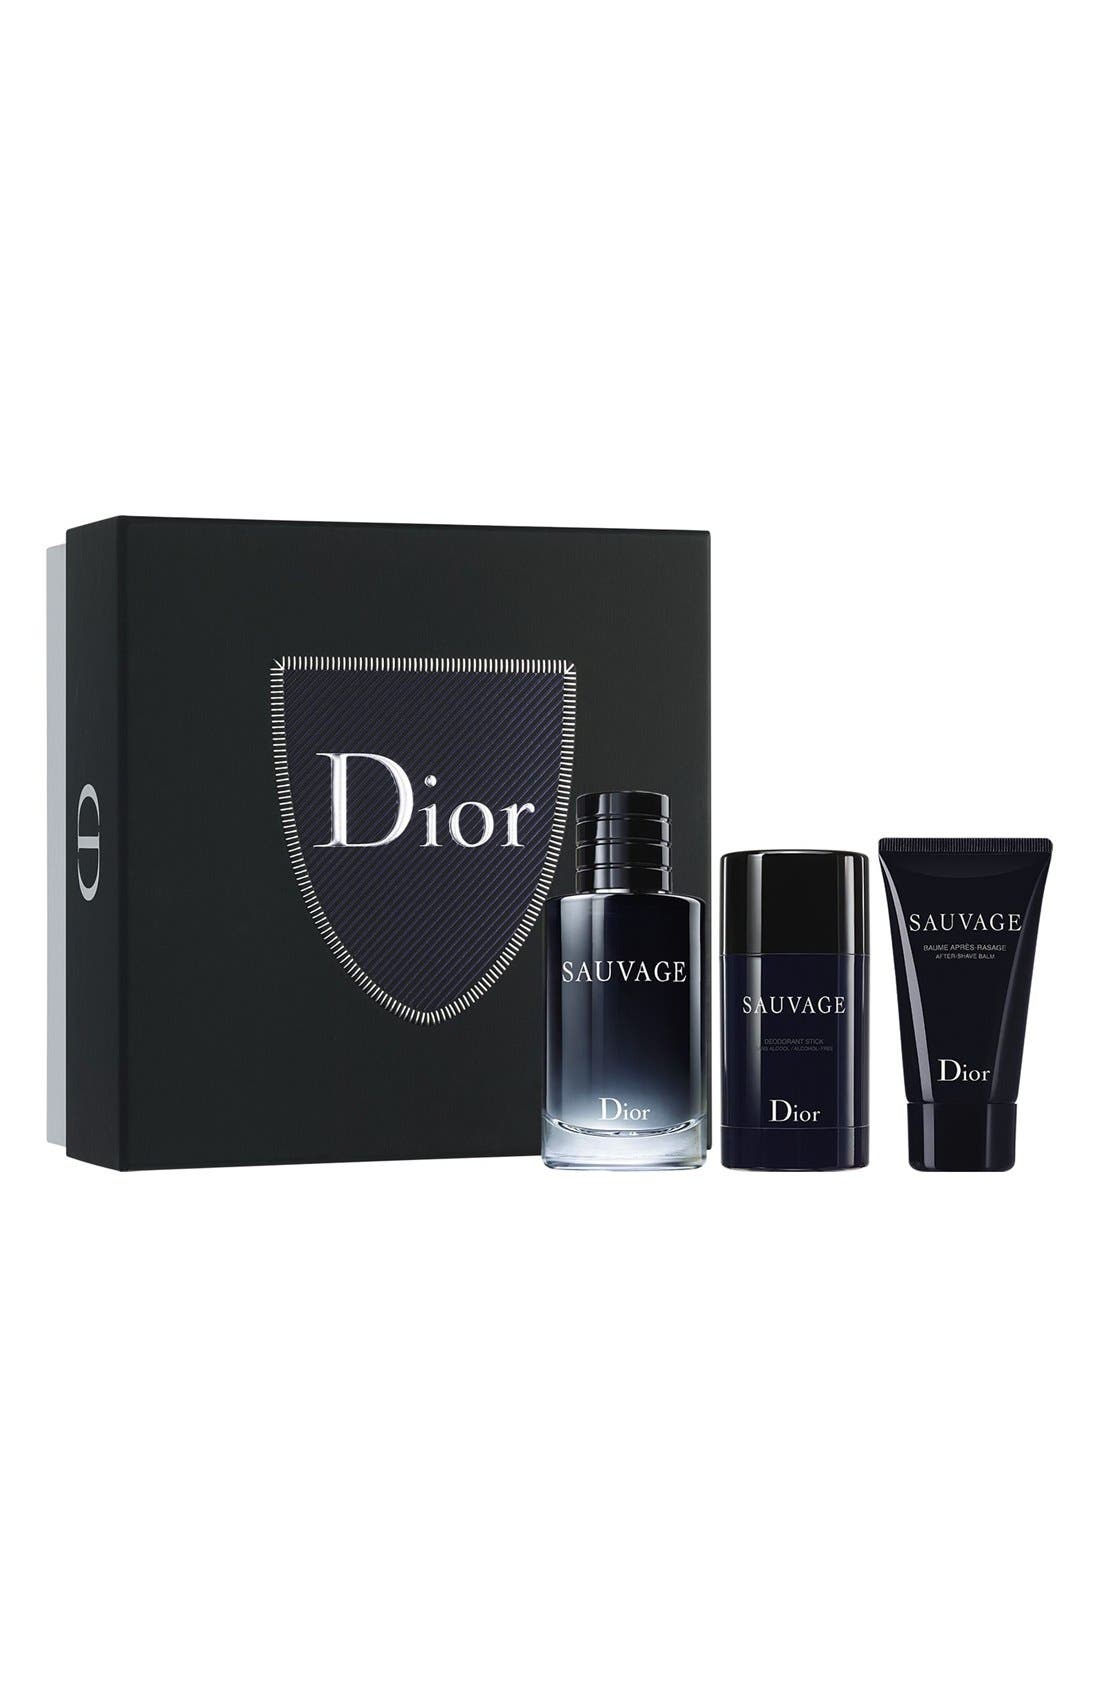 dior sauvage perfume set